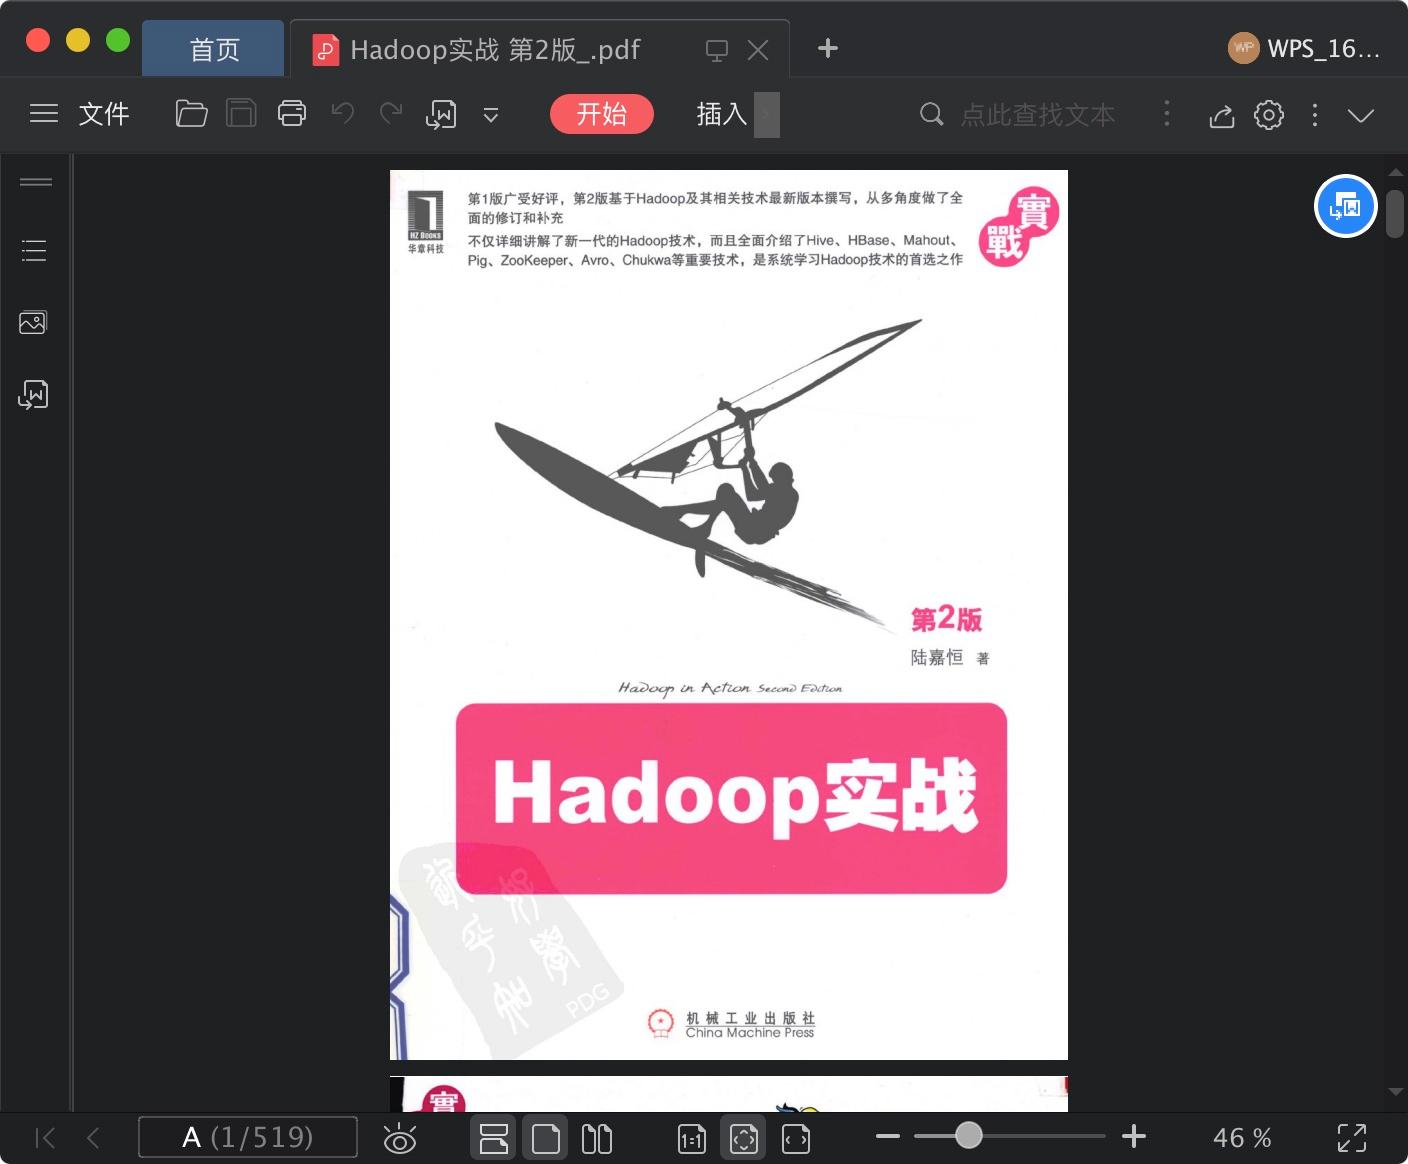 Hadoop实战 第2版pdf电子书籍下载百度网盘